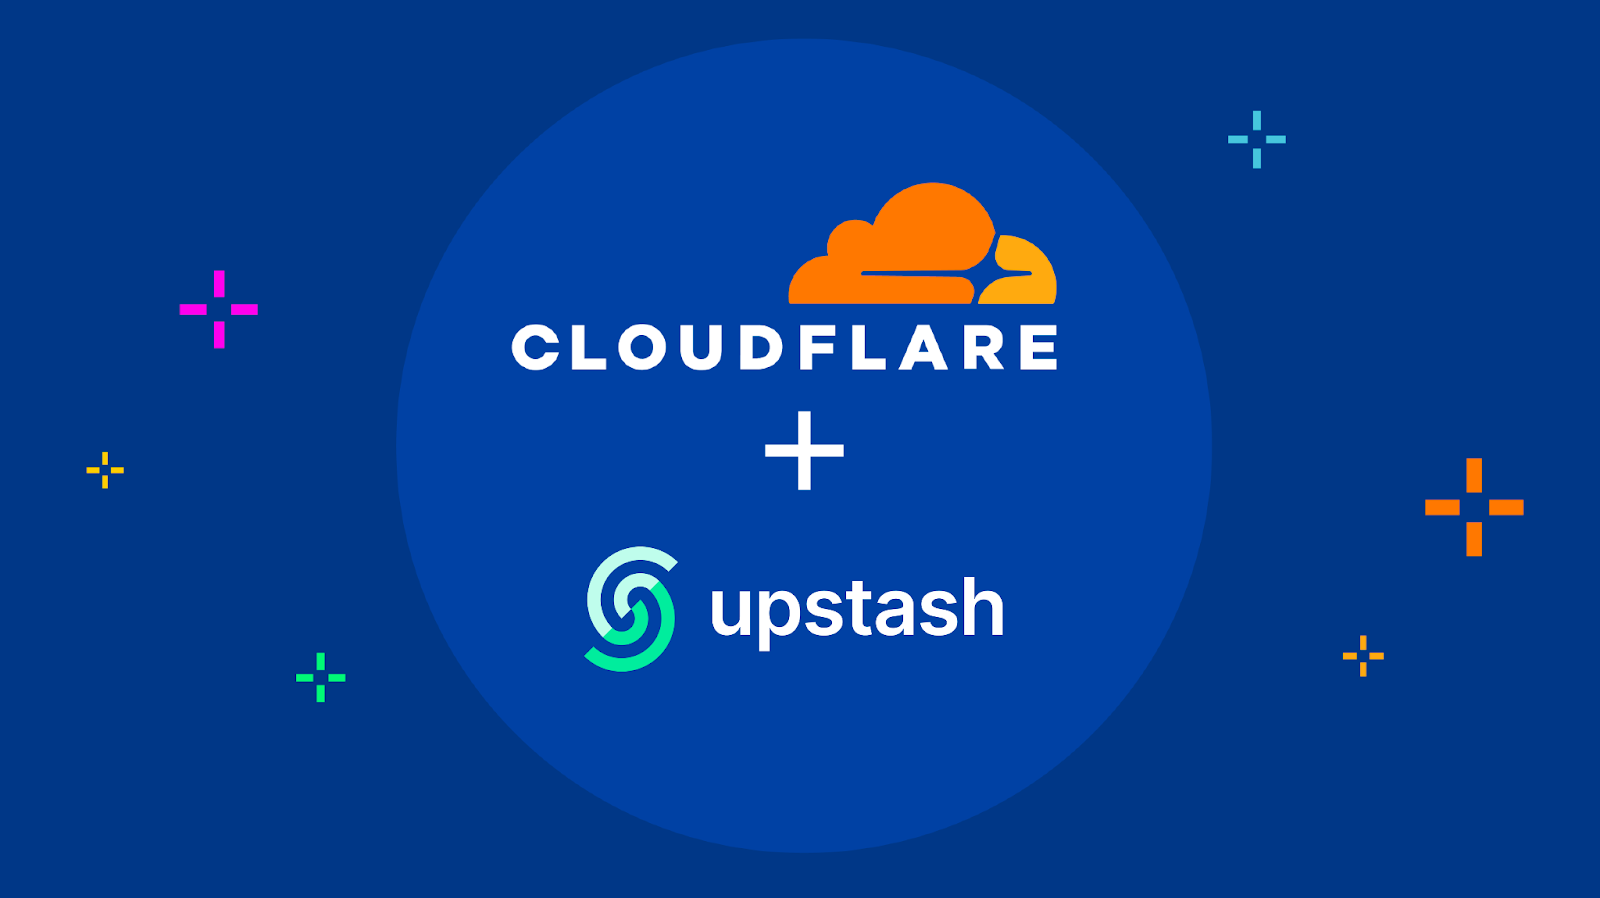 Cloudflare and Upstash partnership